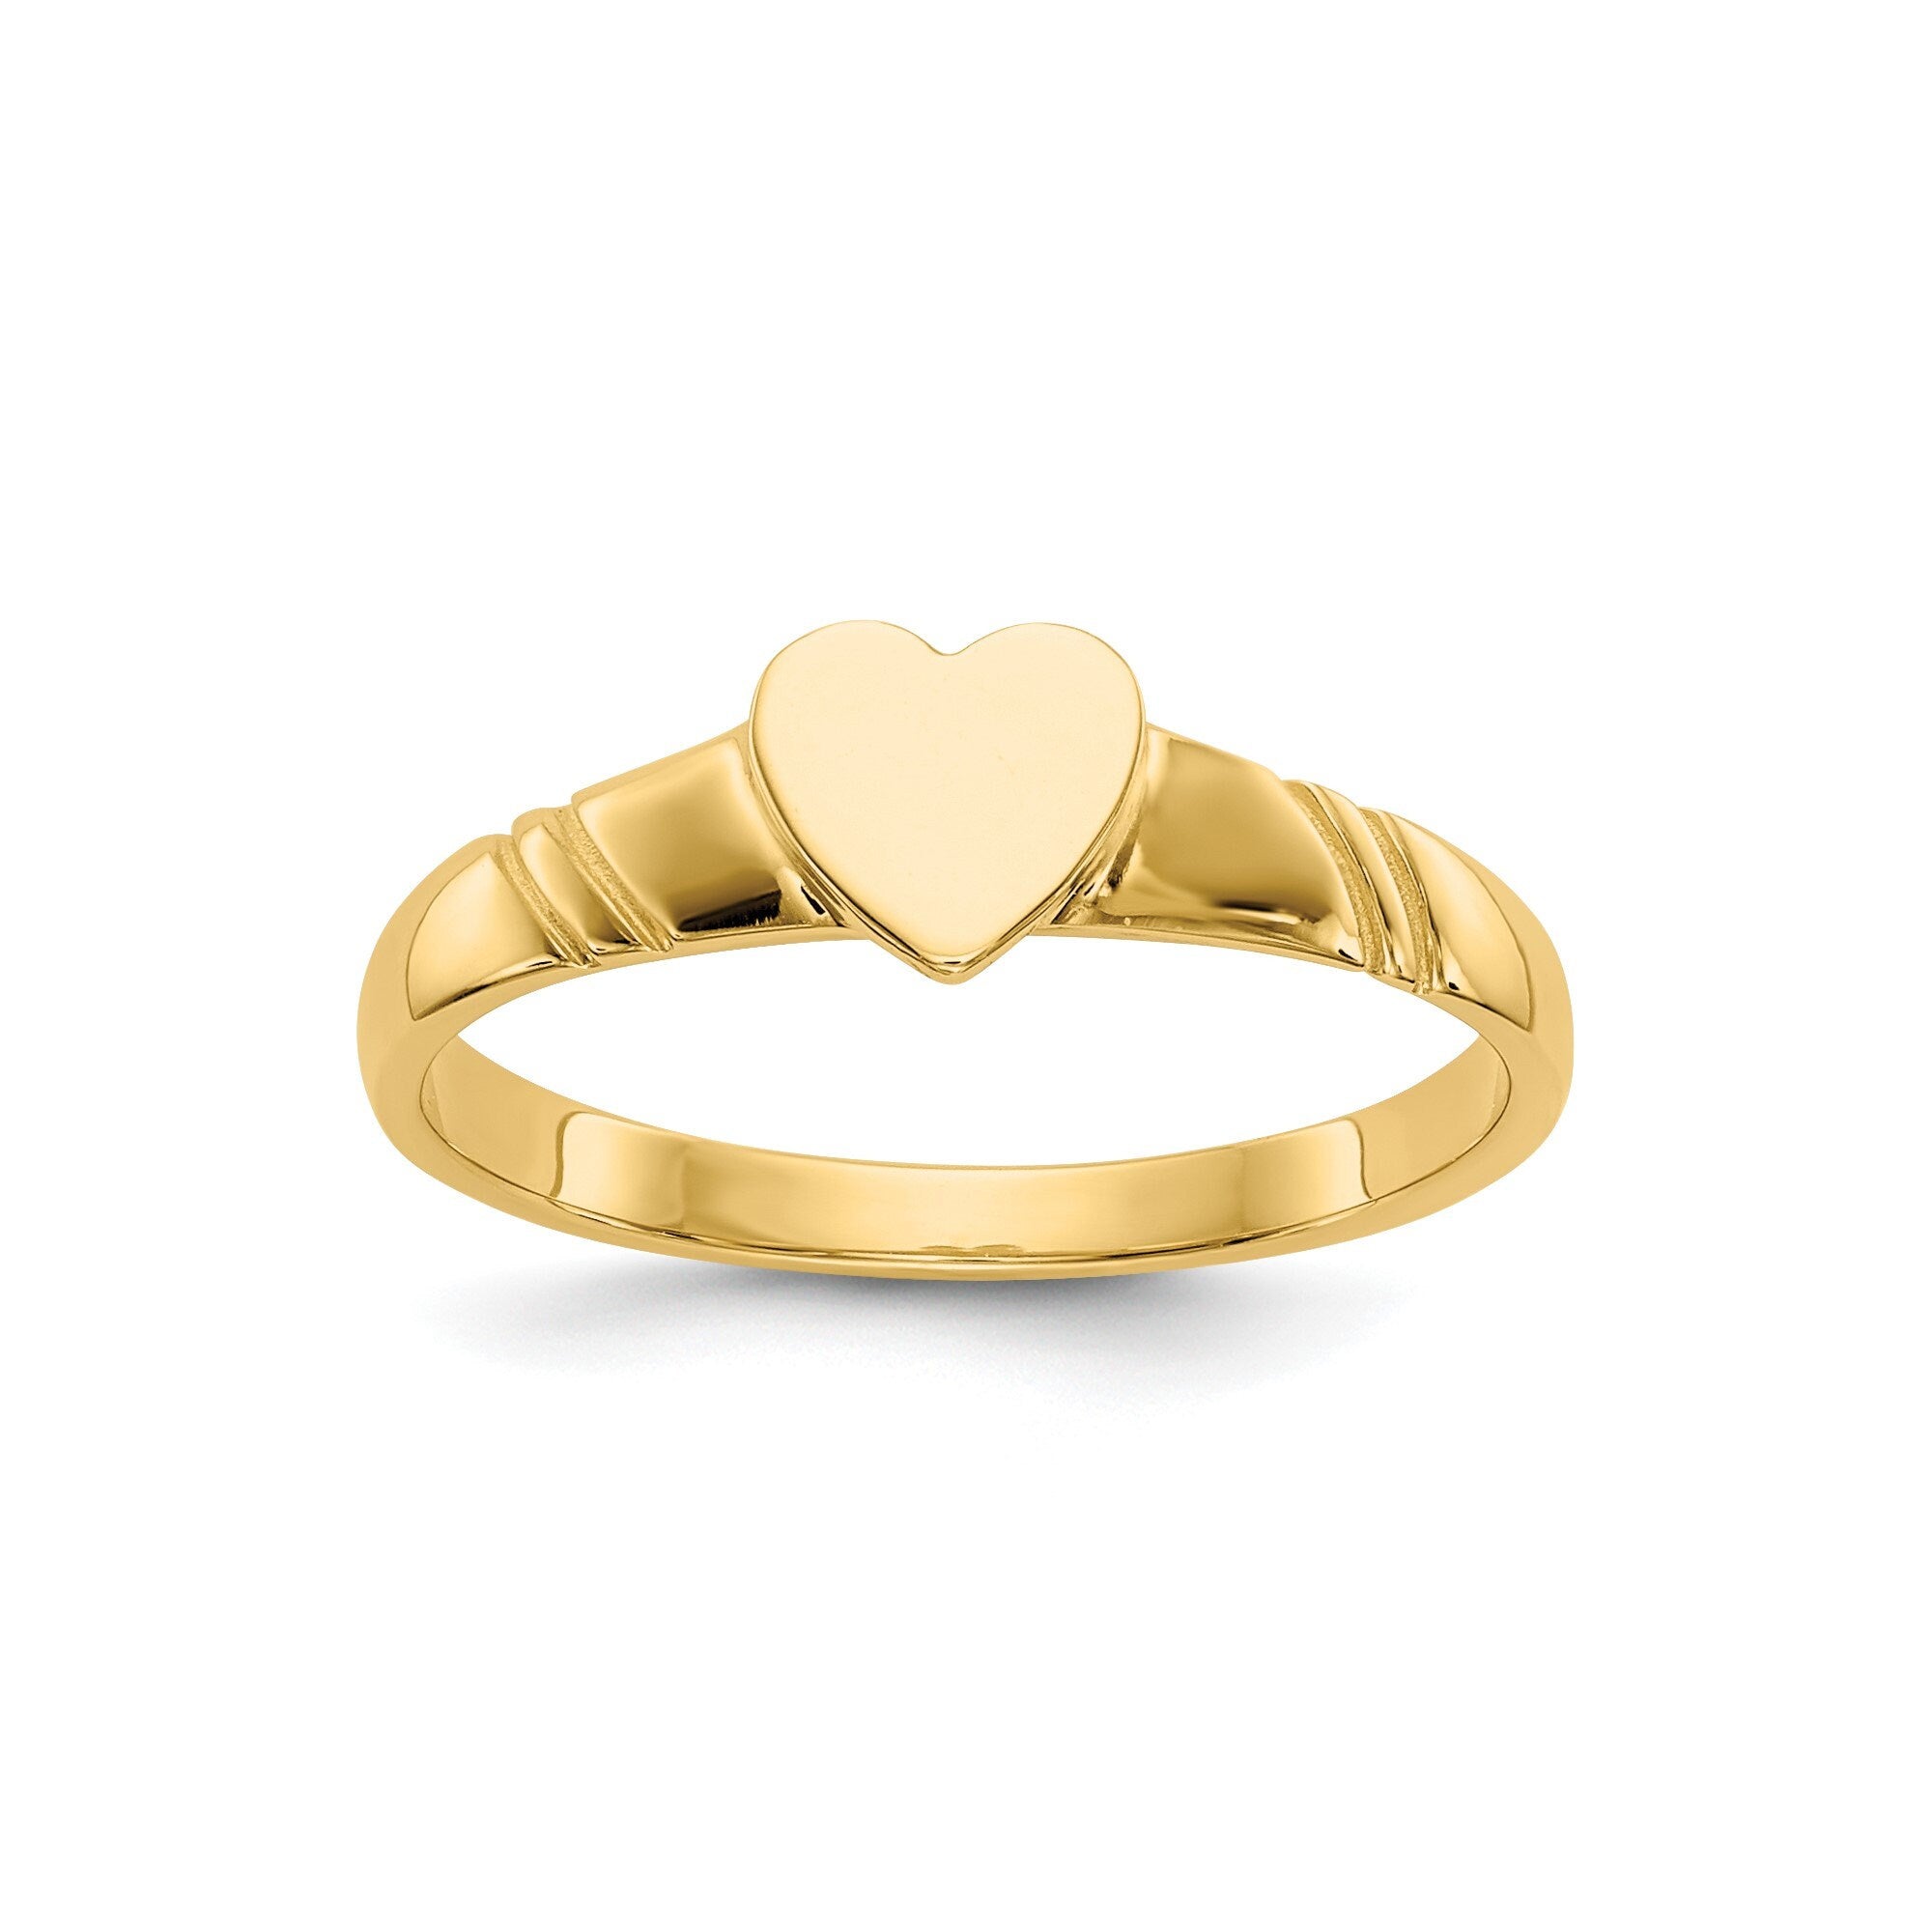 Buy Kids Gold Rings Online | Kids Gold Rings Designs @ Best Prices